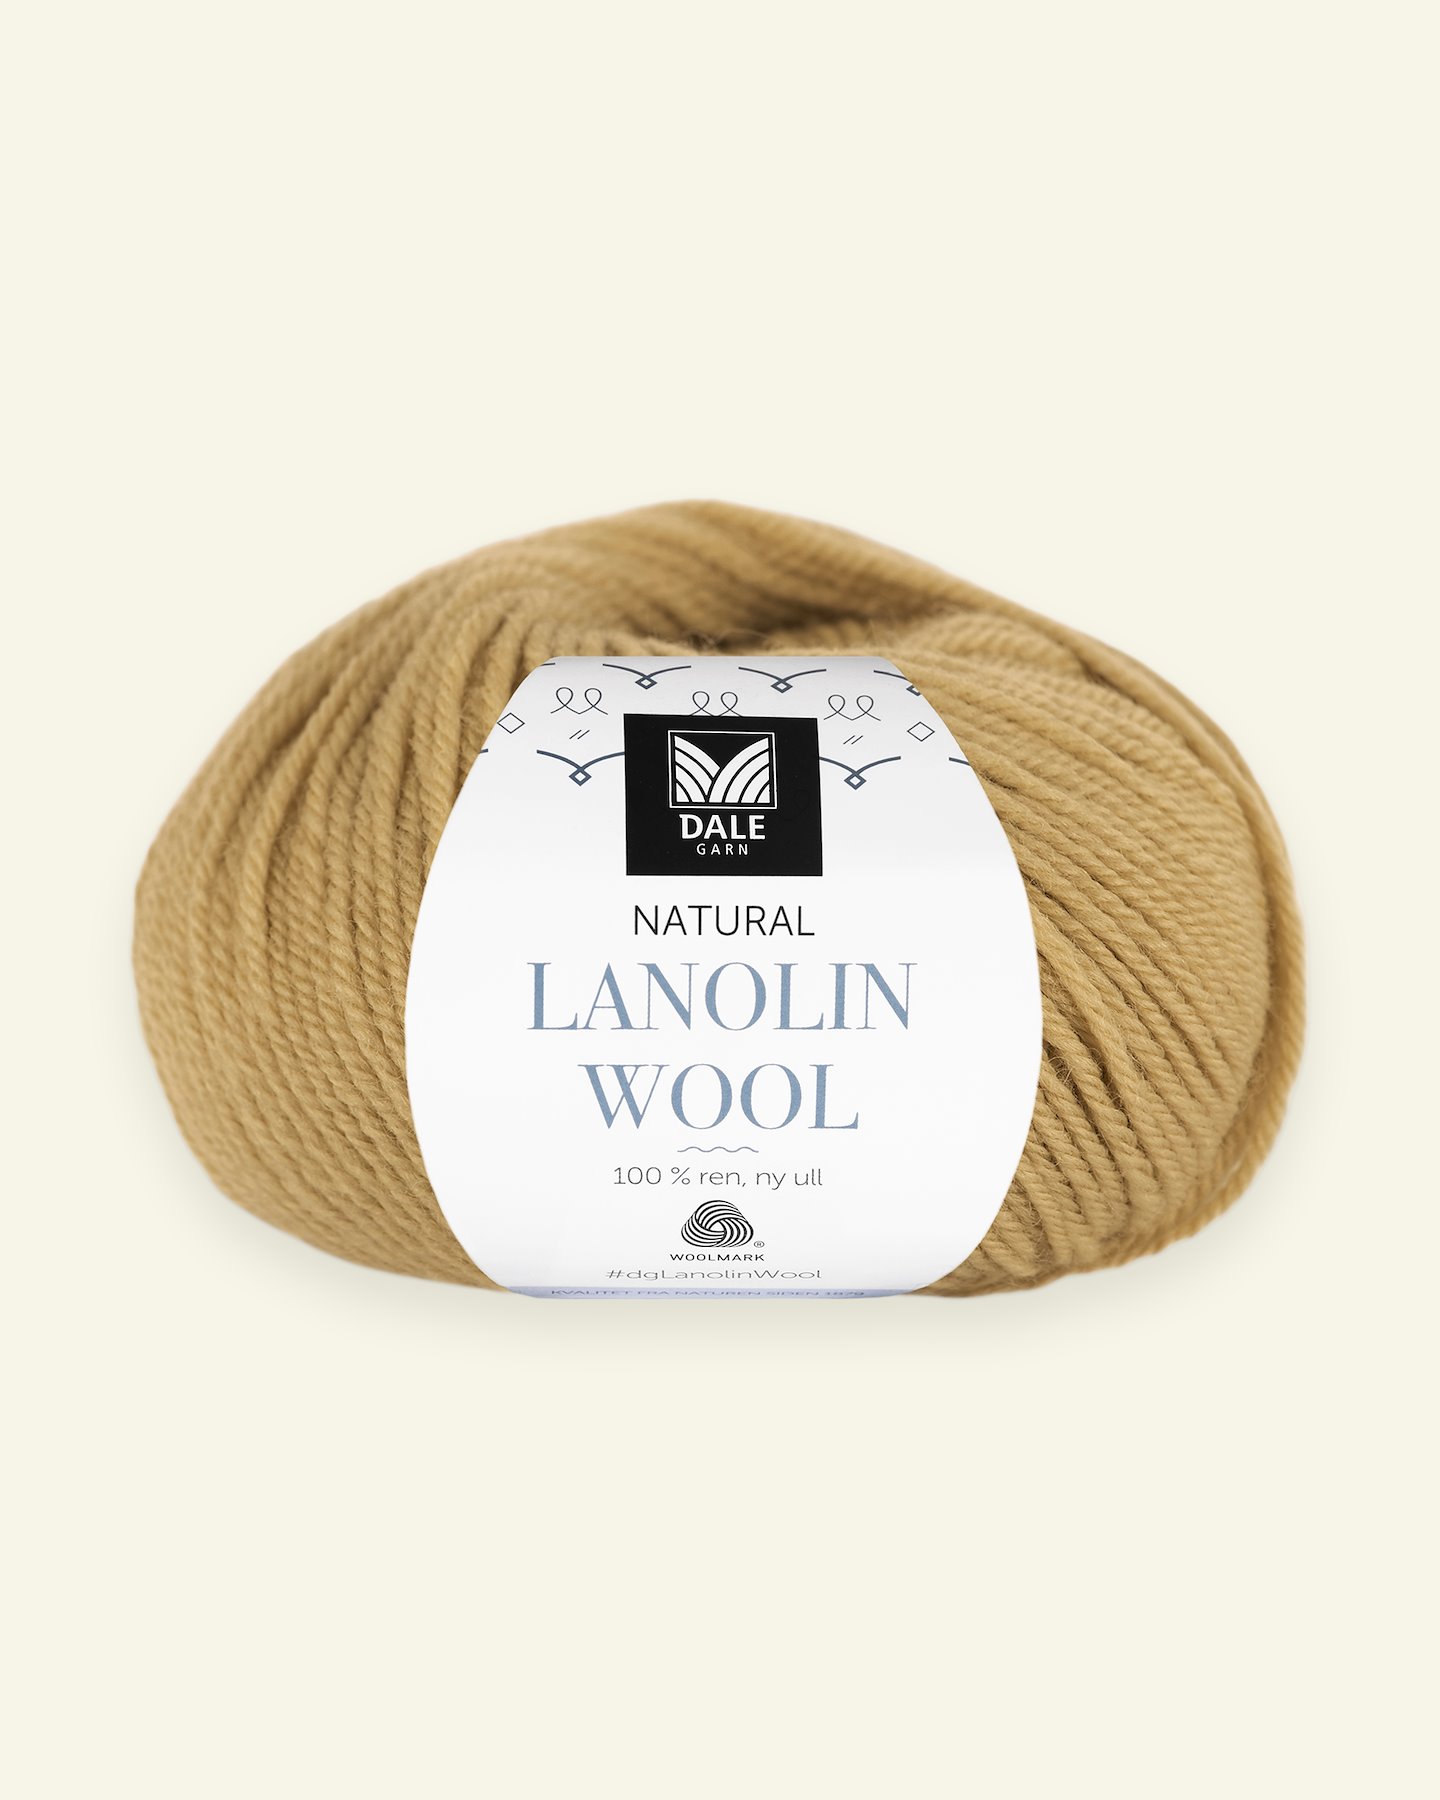 Dale Garn, 100% wool yarn "Lanolin Wool", light curry (1457) 90000303_pack